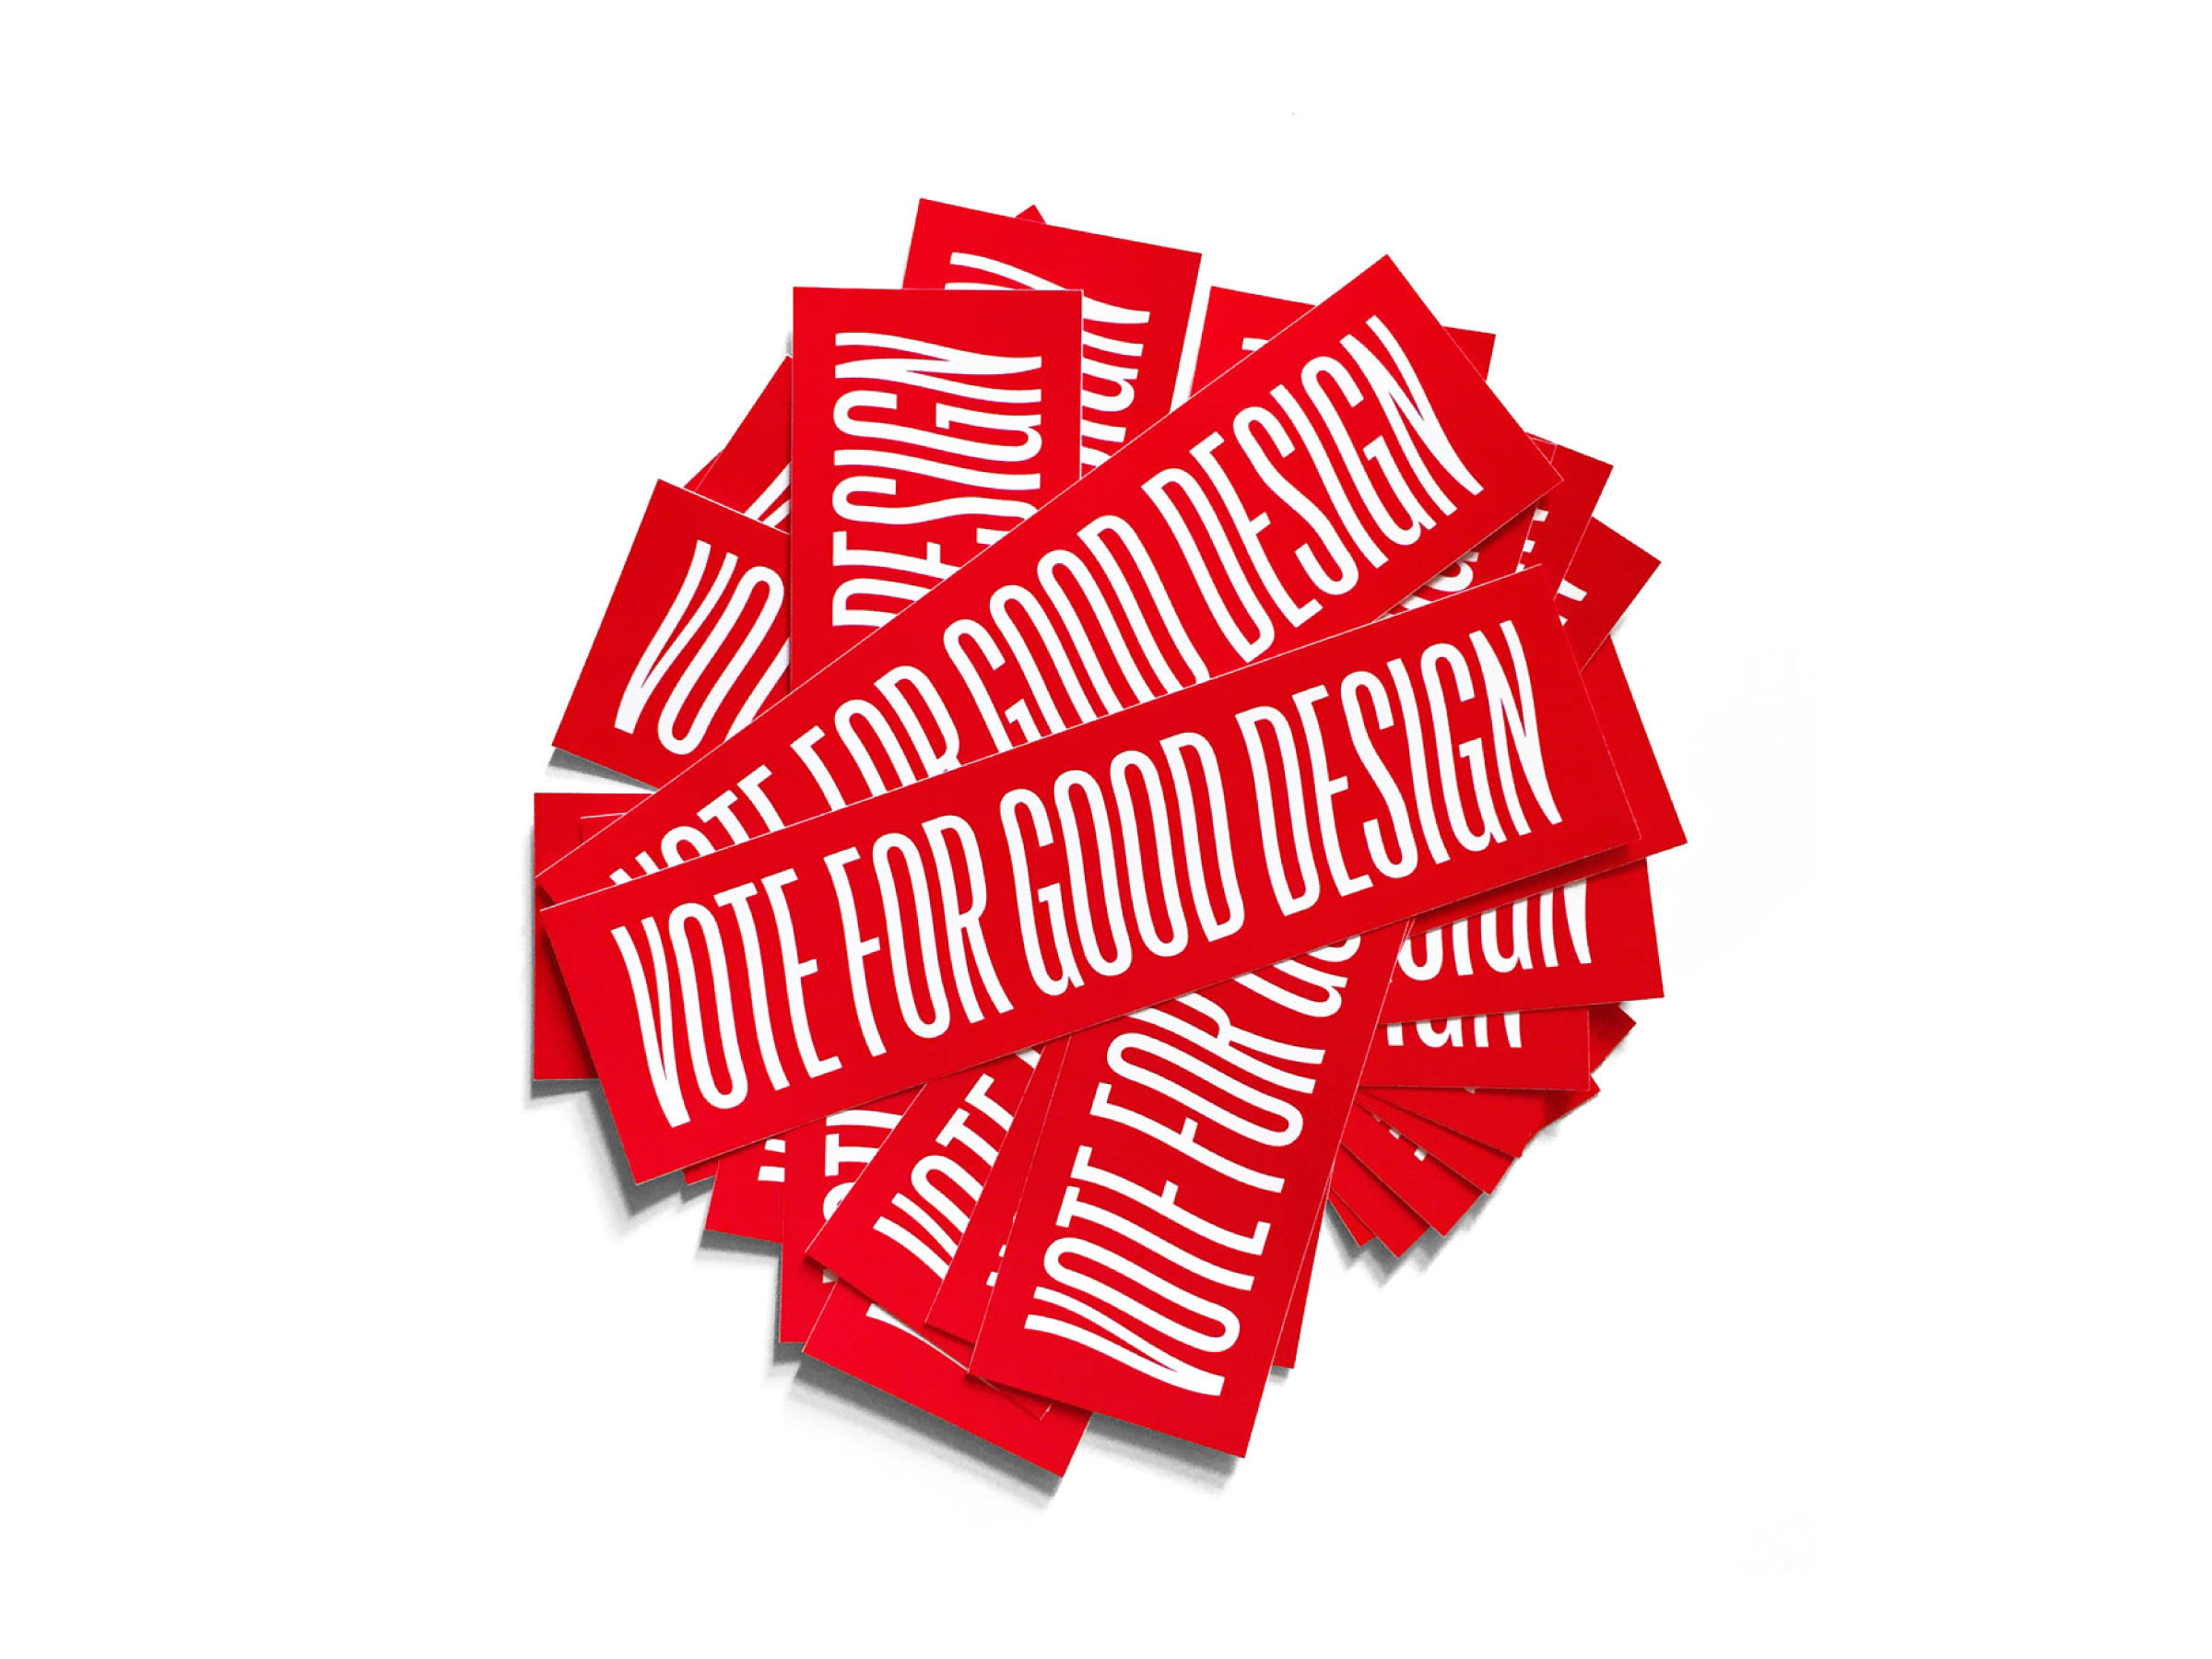 Branding Politics - Vote for Good Design